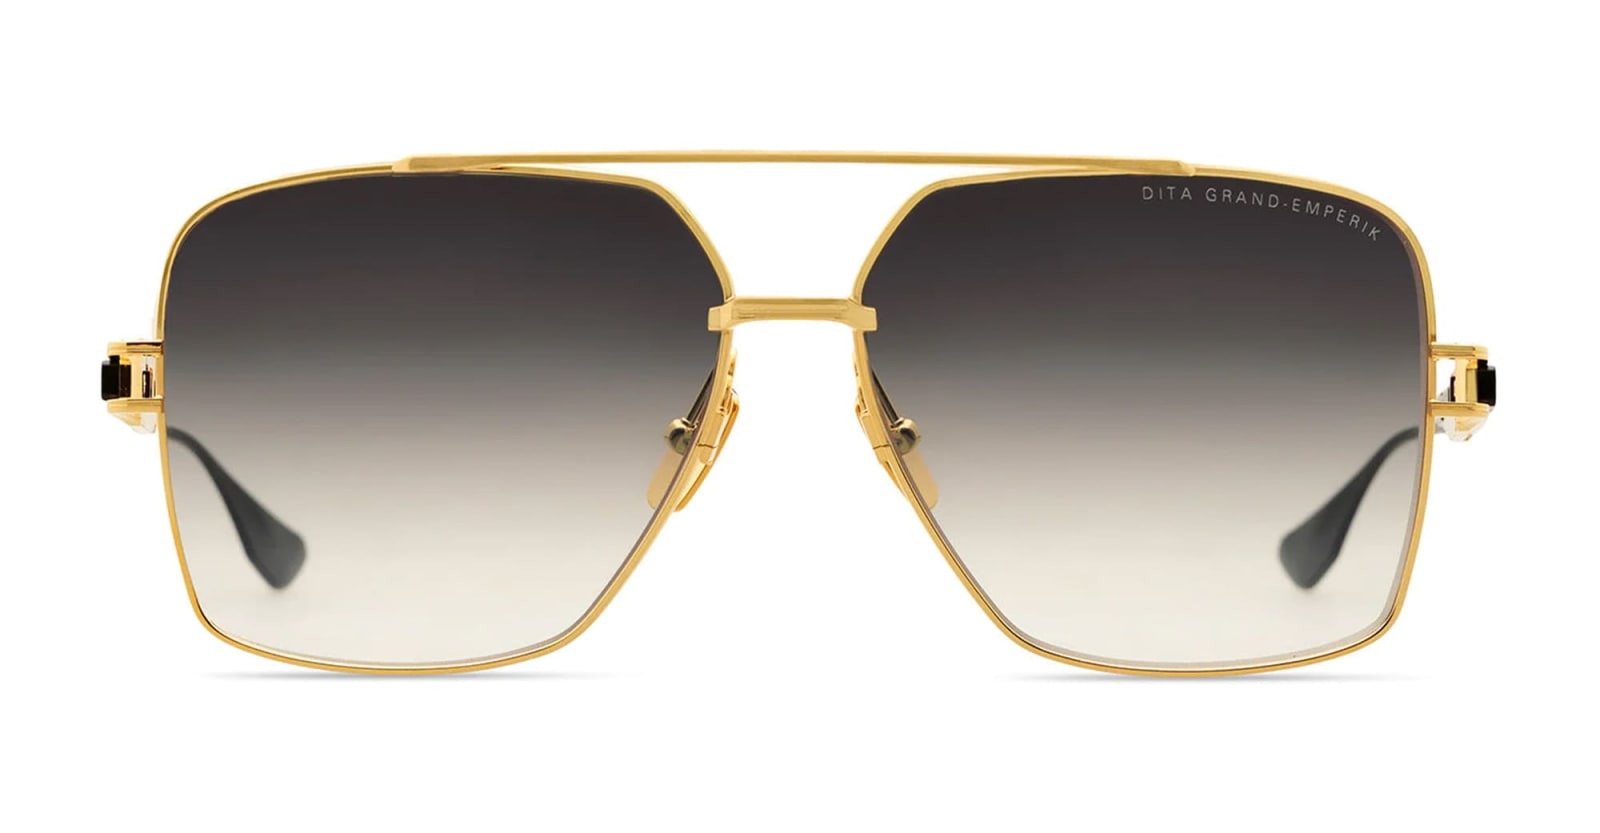 Dita Grand-emperik - Yellow Gold / Matte Black Sunglasses